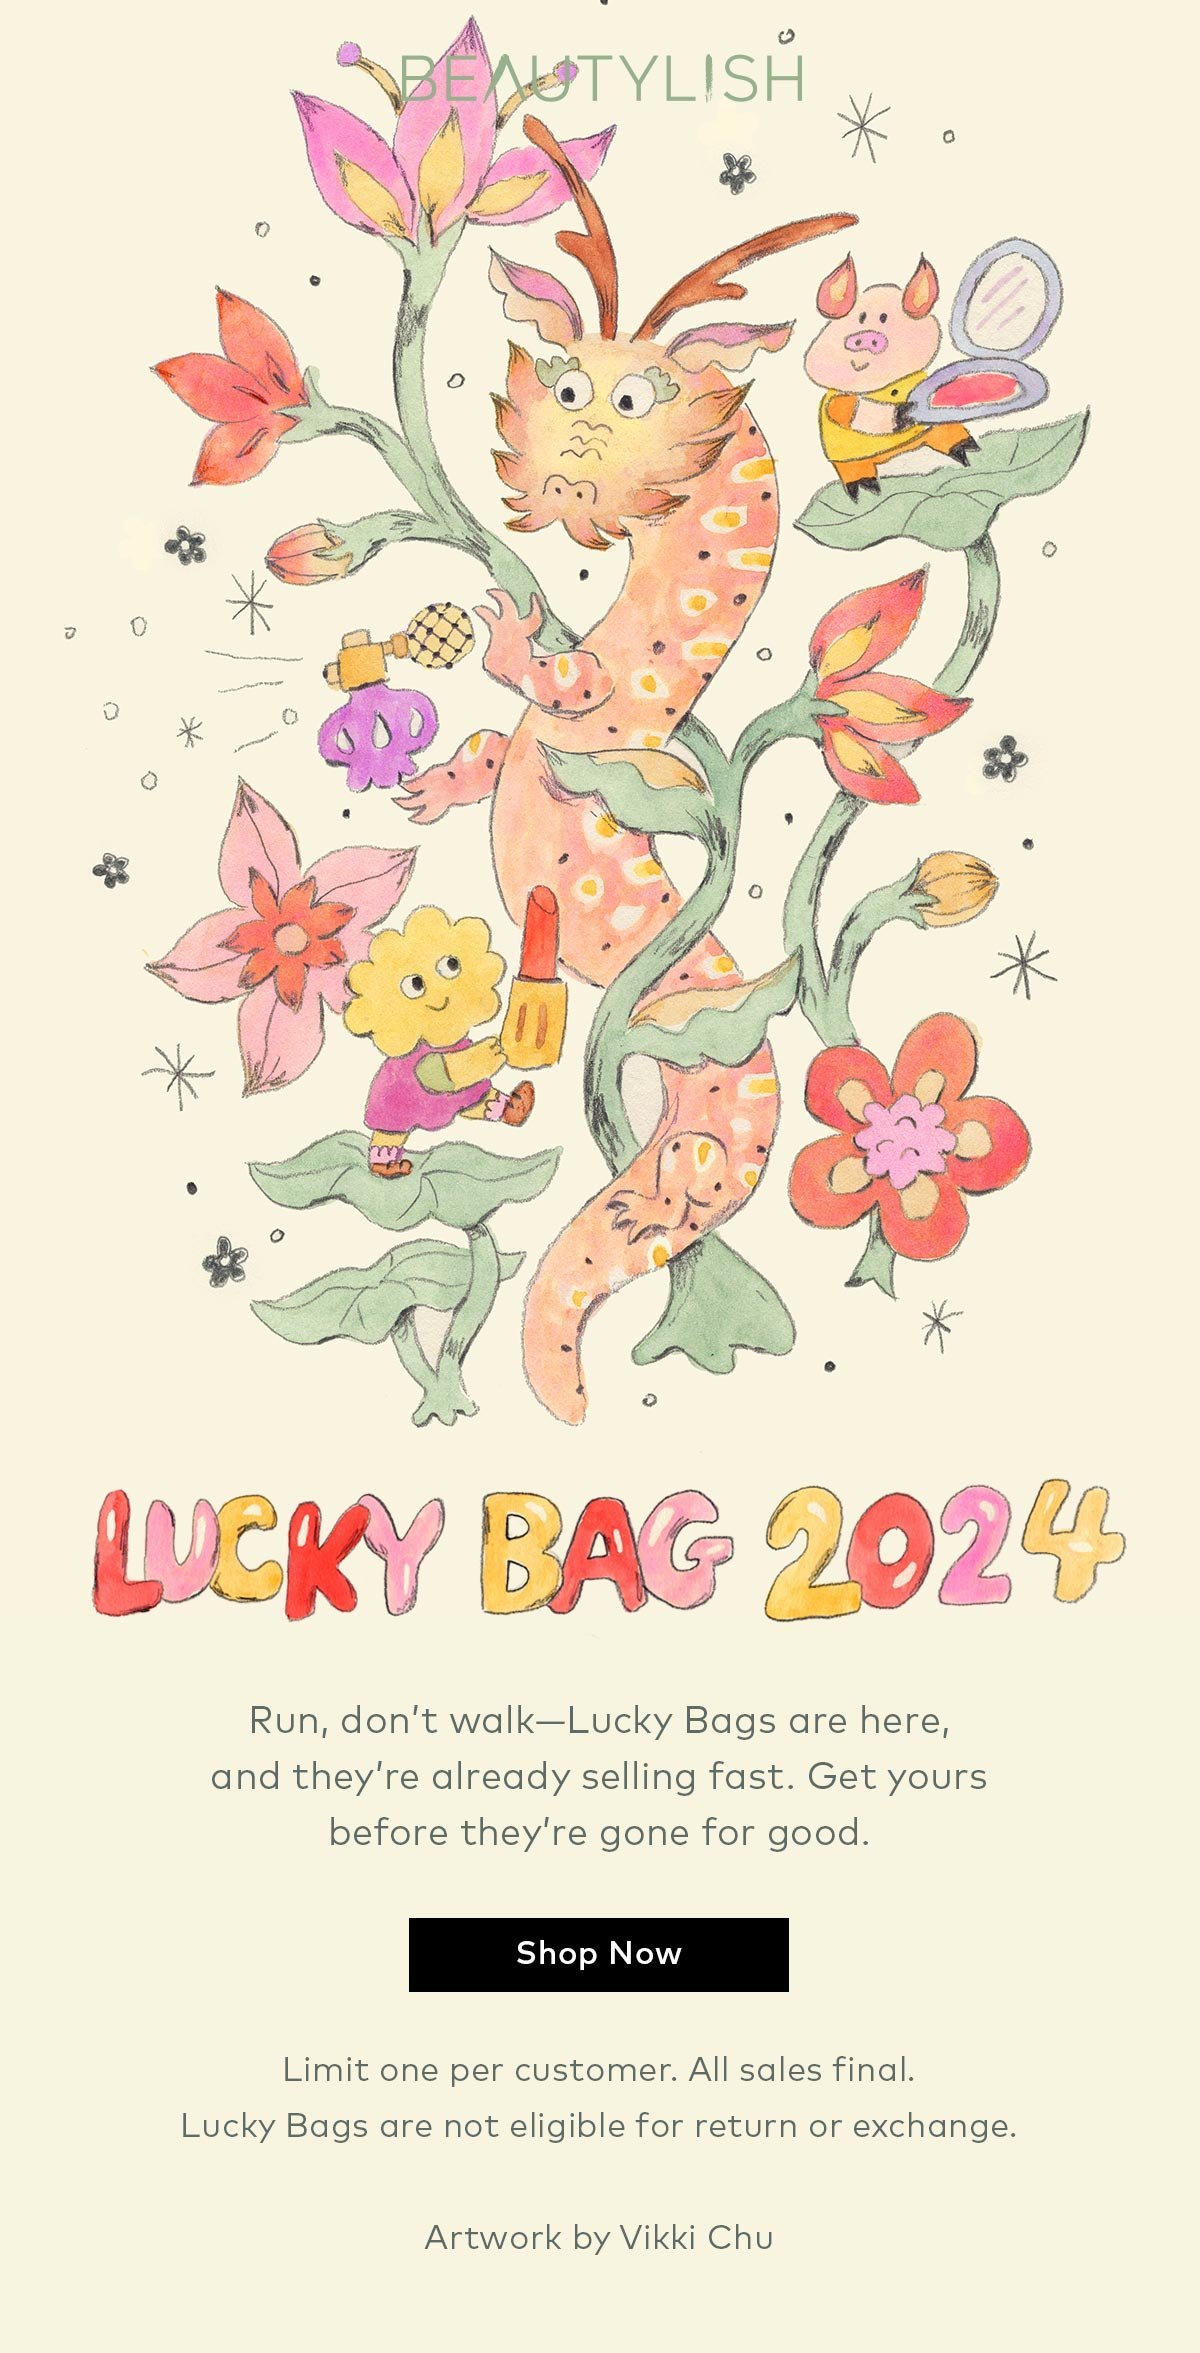 Shop the Lucky Bag at Beautylish.com